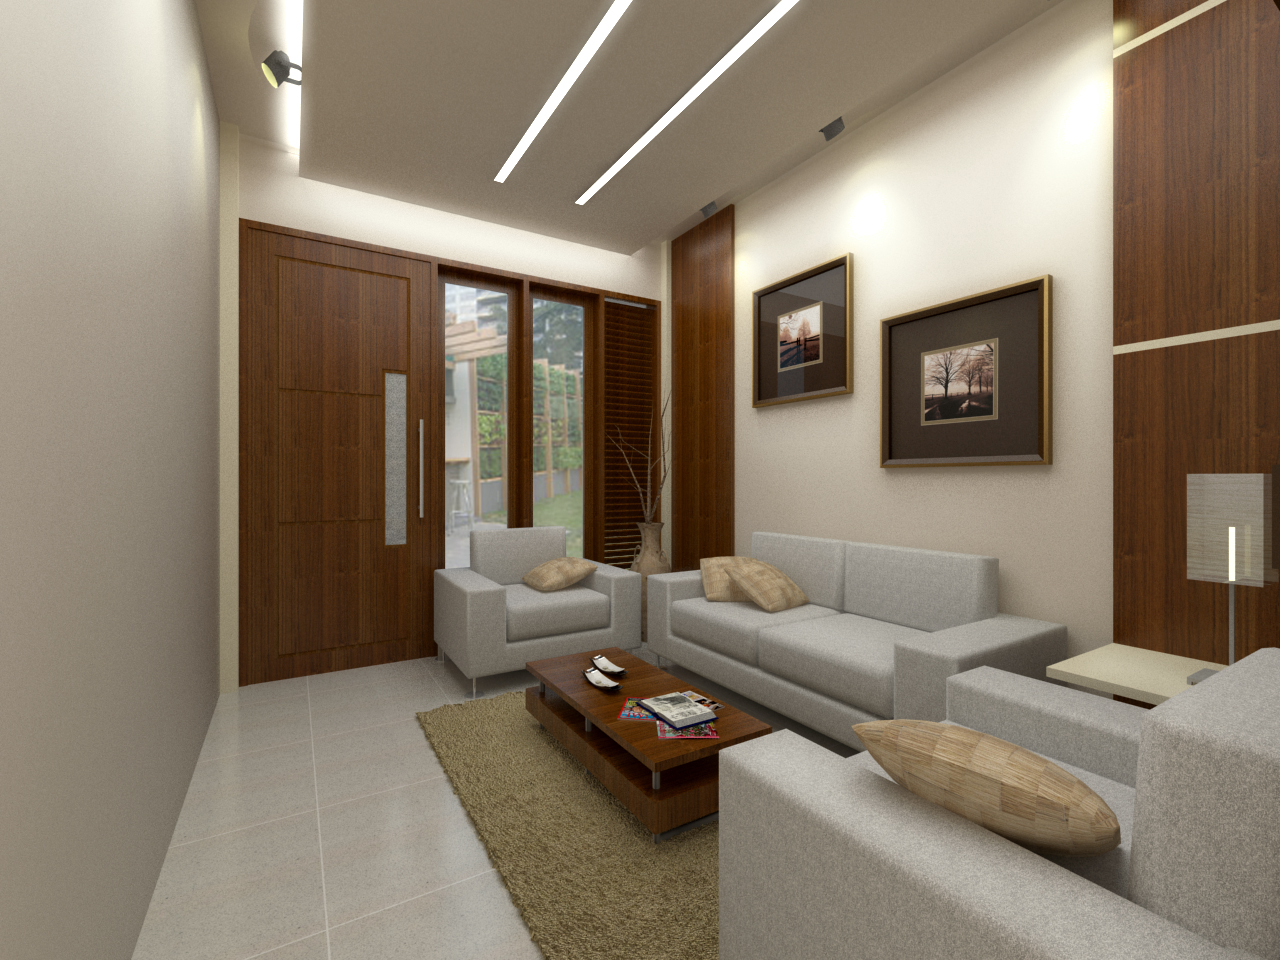 Kumpulan Desain Interior Rumah Minimalis Surabaya Kumpulan Desain